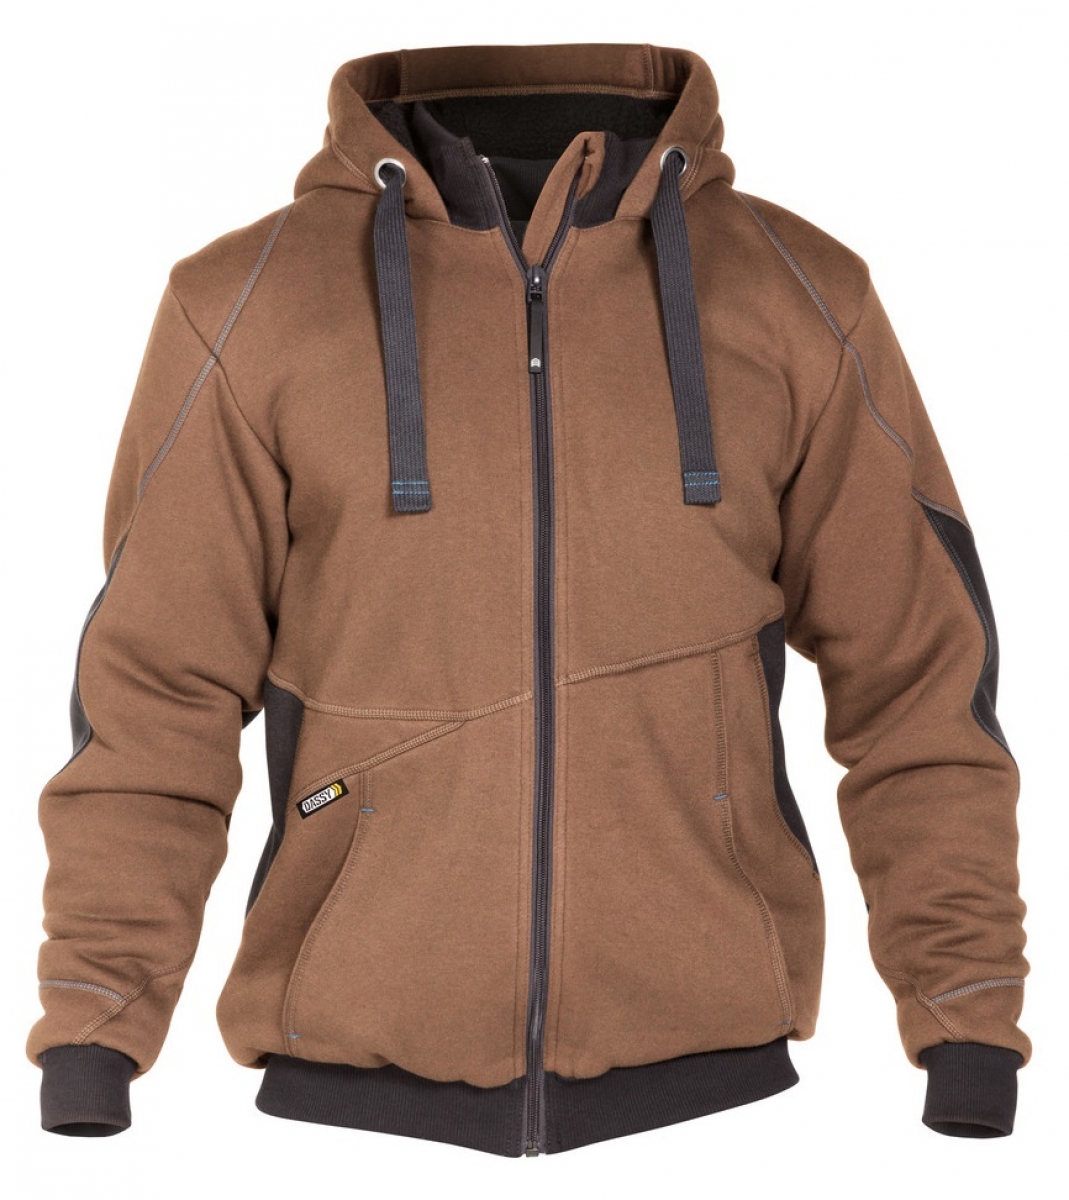 DASSY-Workwear, Sweatshirt-Jacke "PULSE", braun/grau